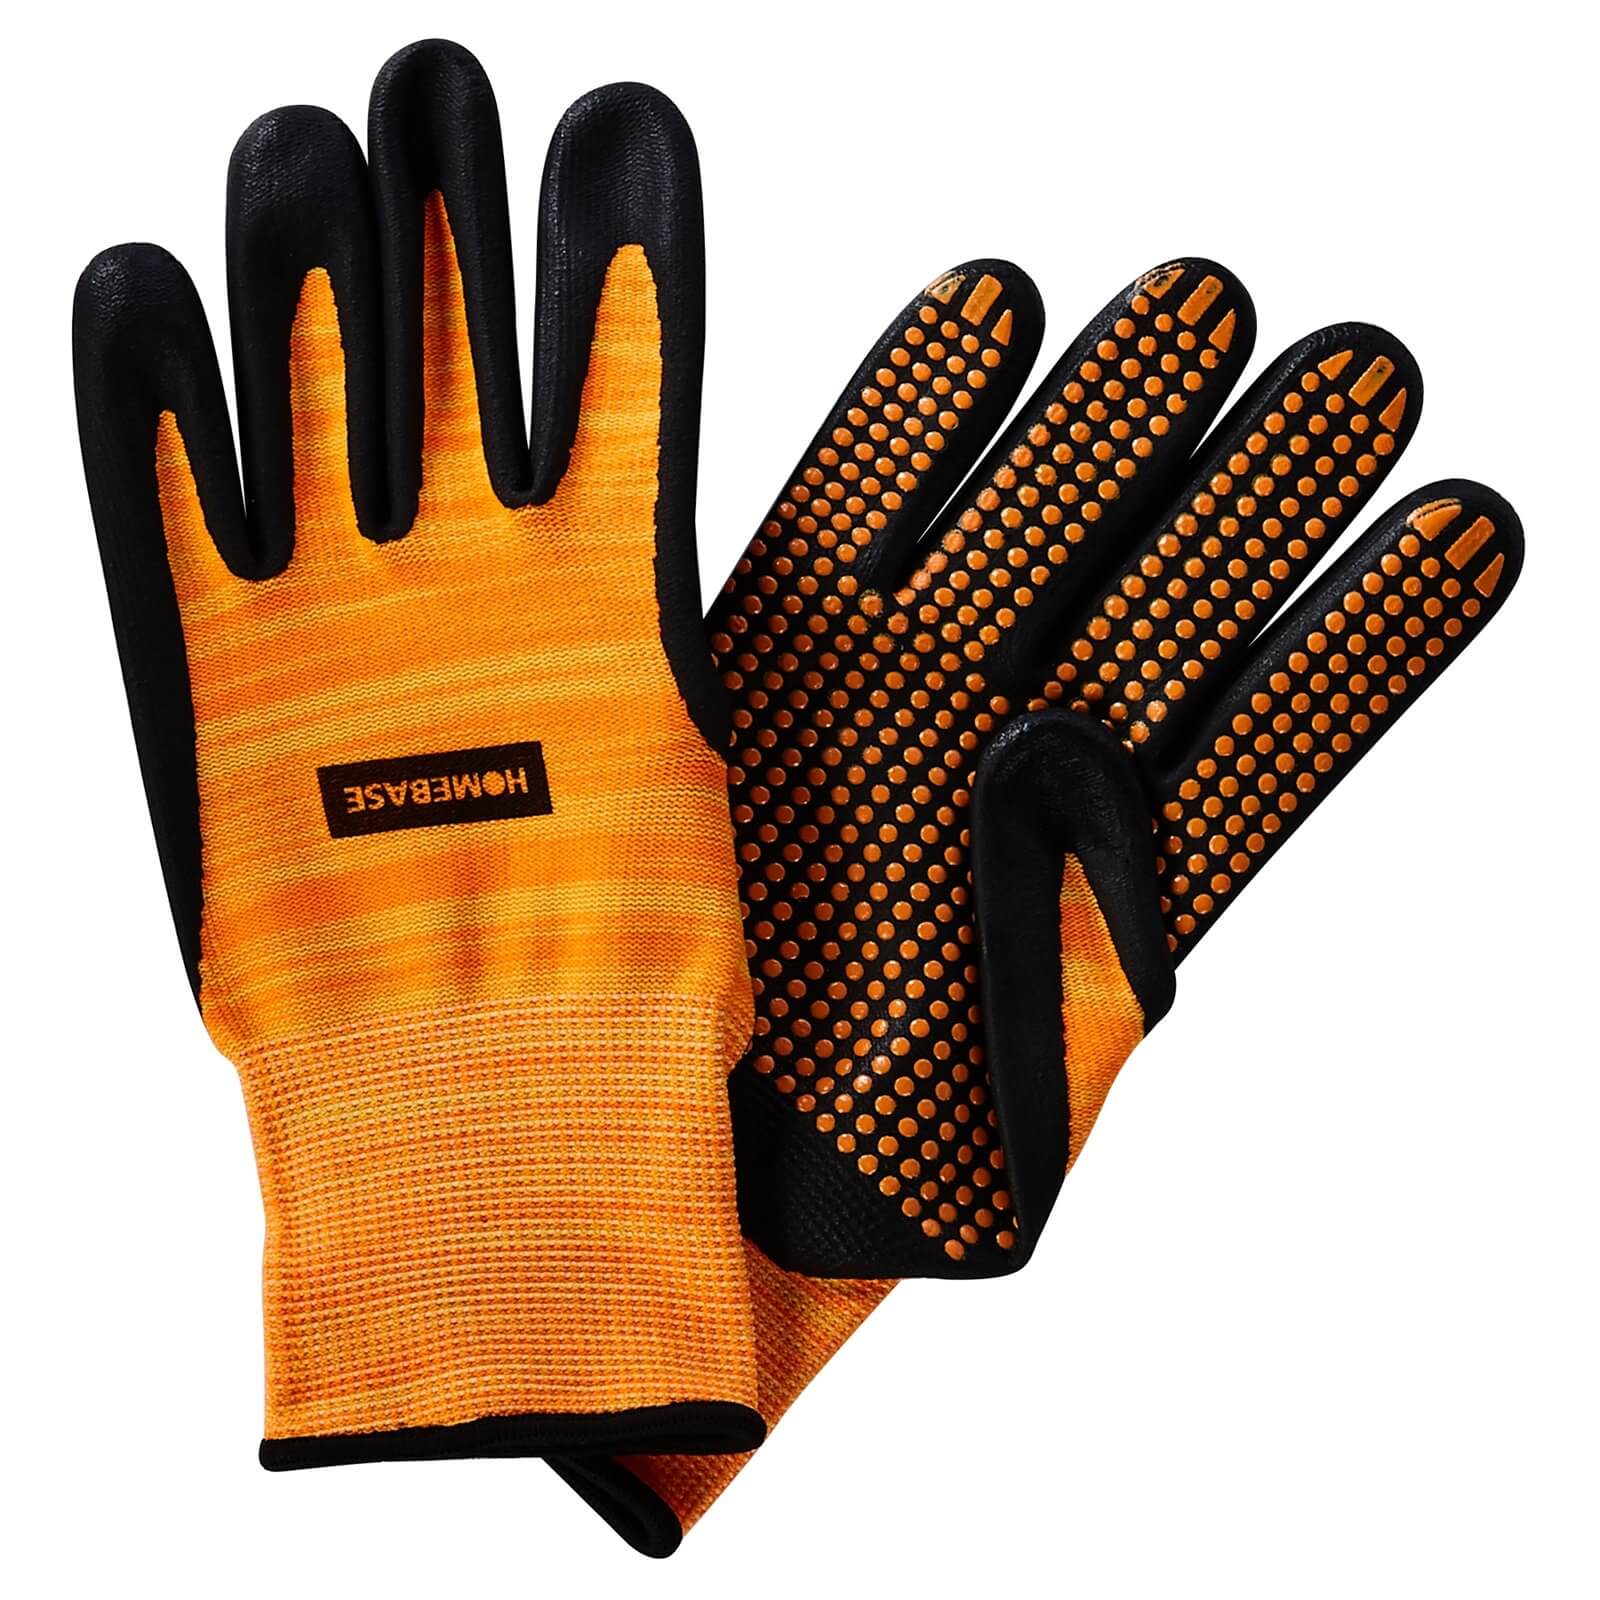 Photo of Homebase Protect & Grip Gardening Gloves - Large